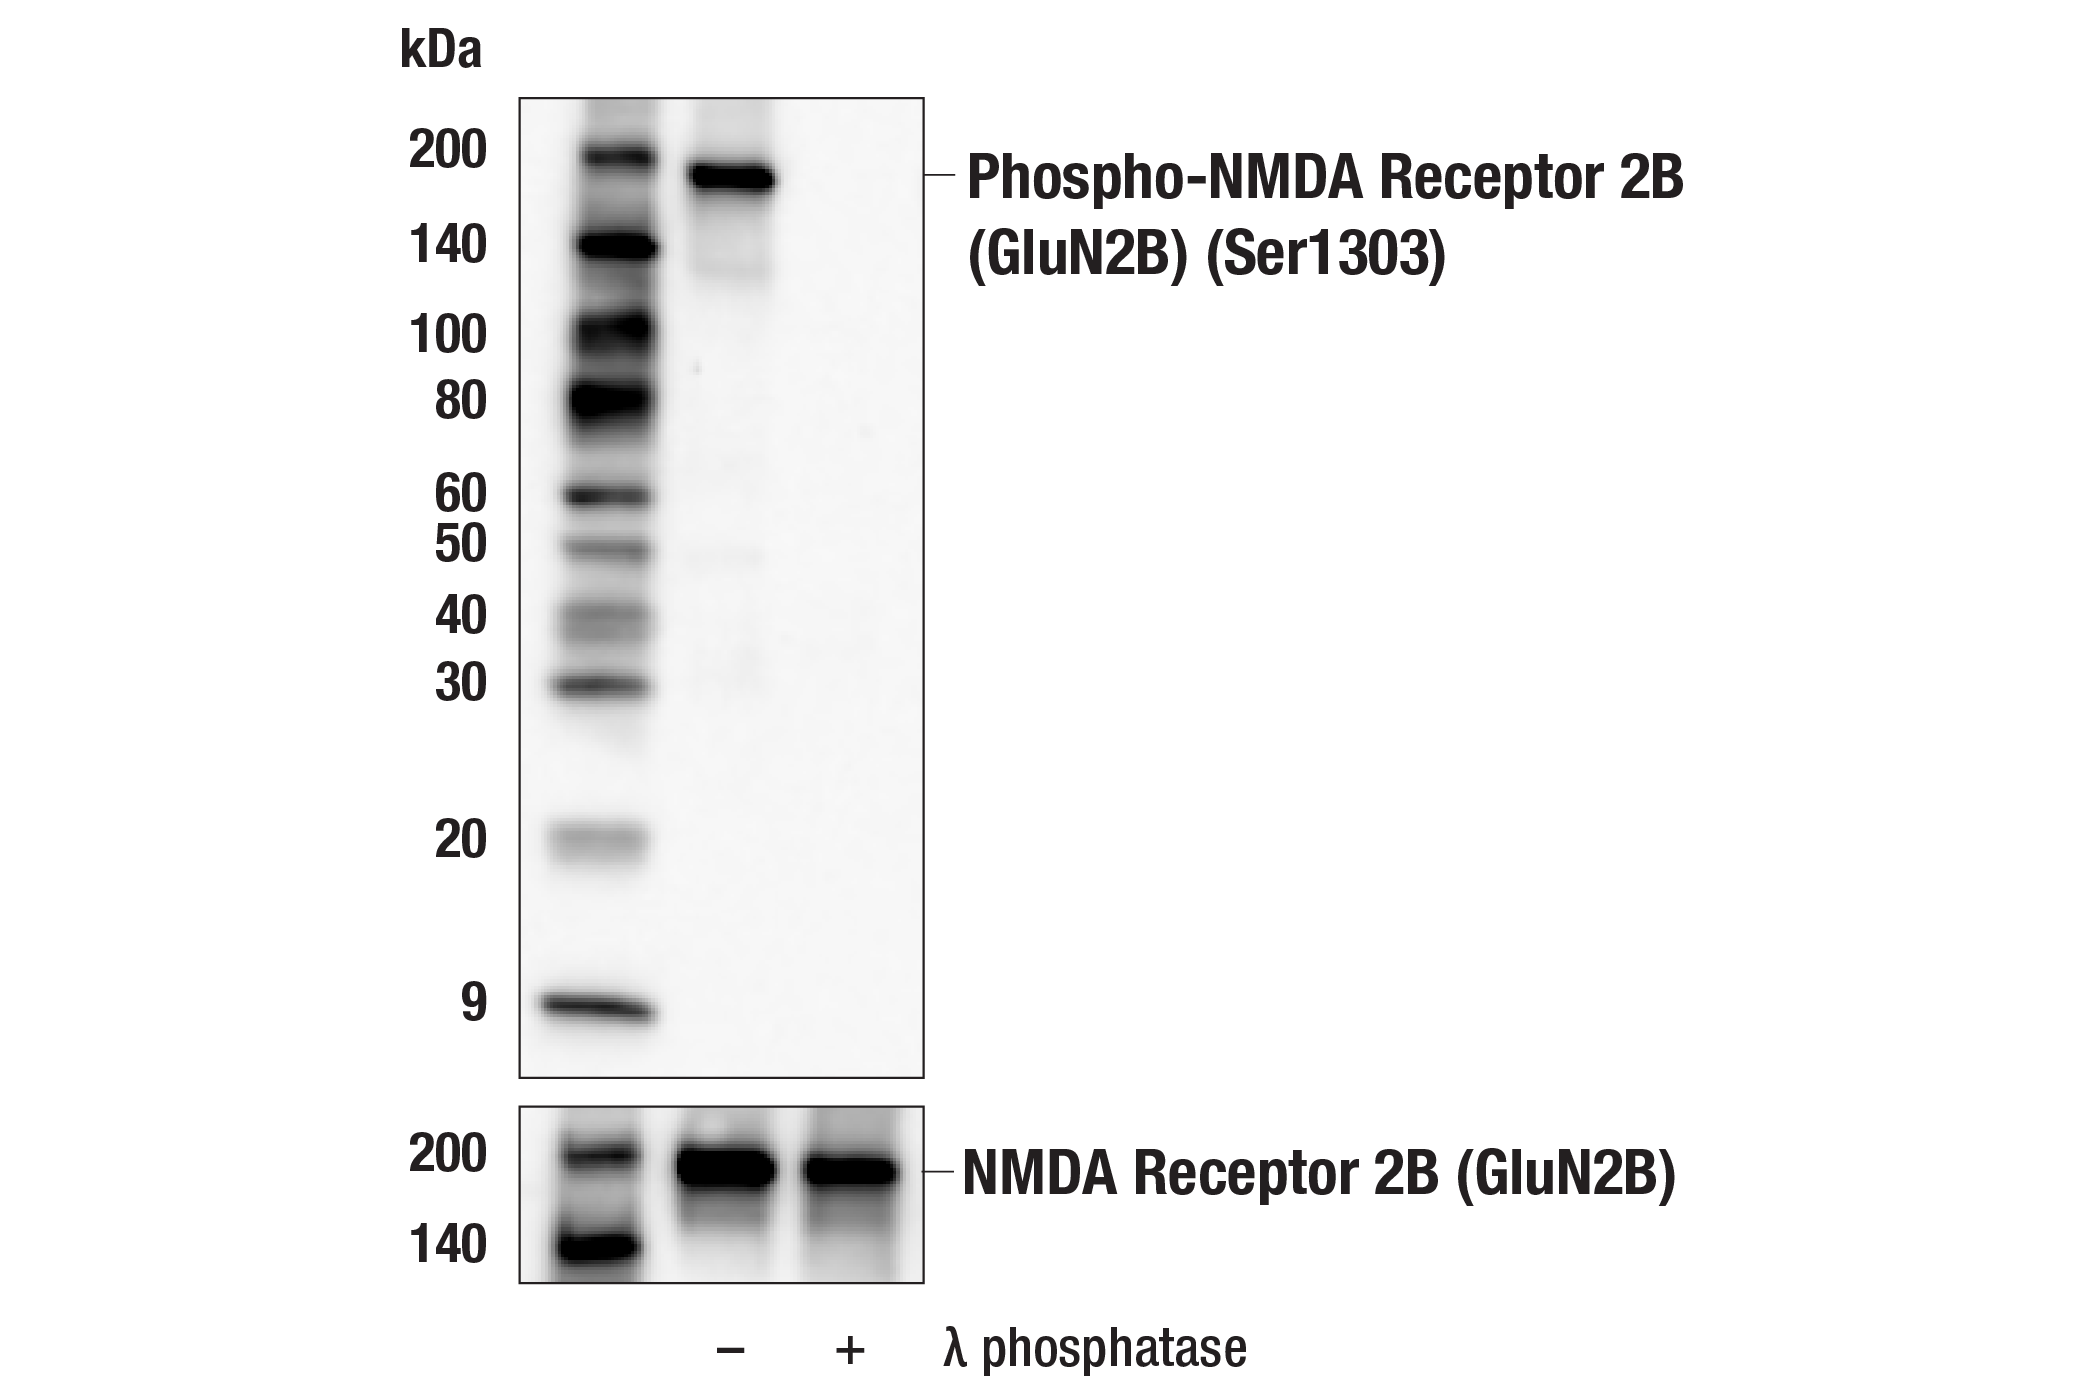 Phospho-NMDA Receptor 1 (GluN1) (Ser897) Antibody | Cell Signaling 